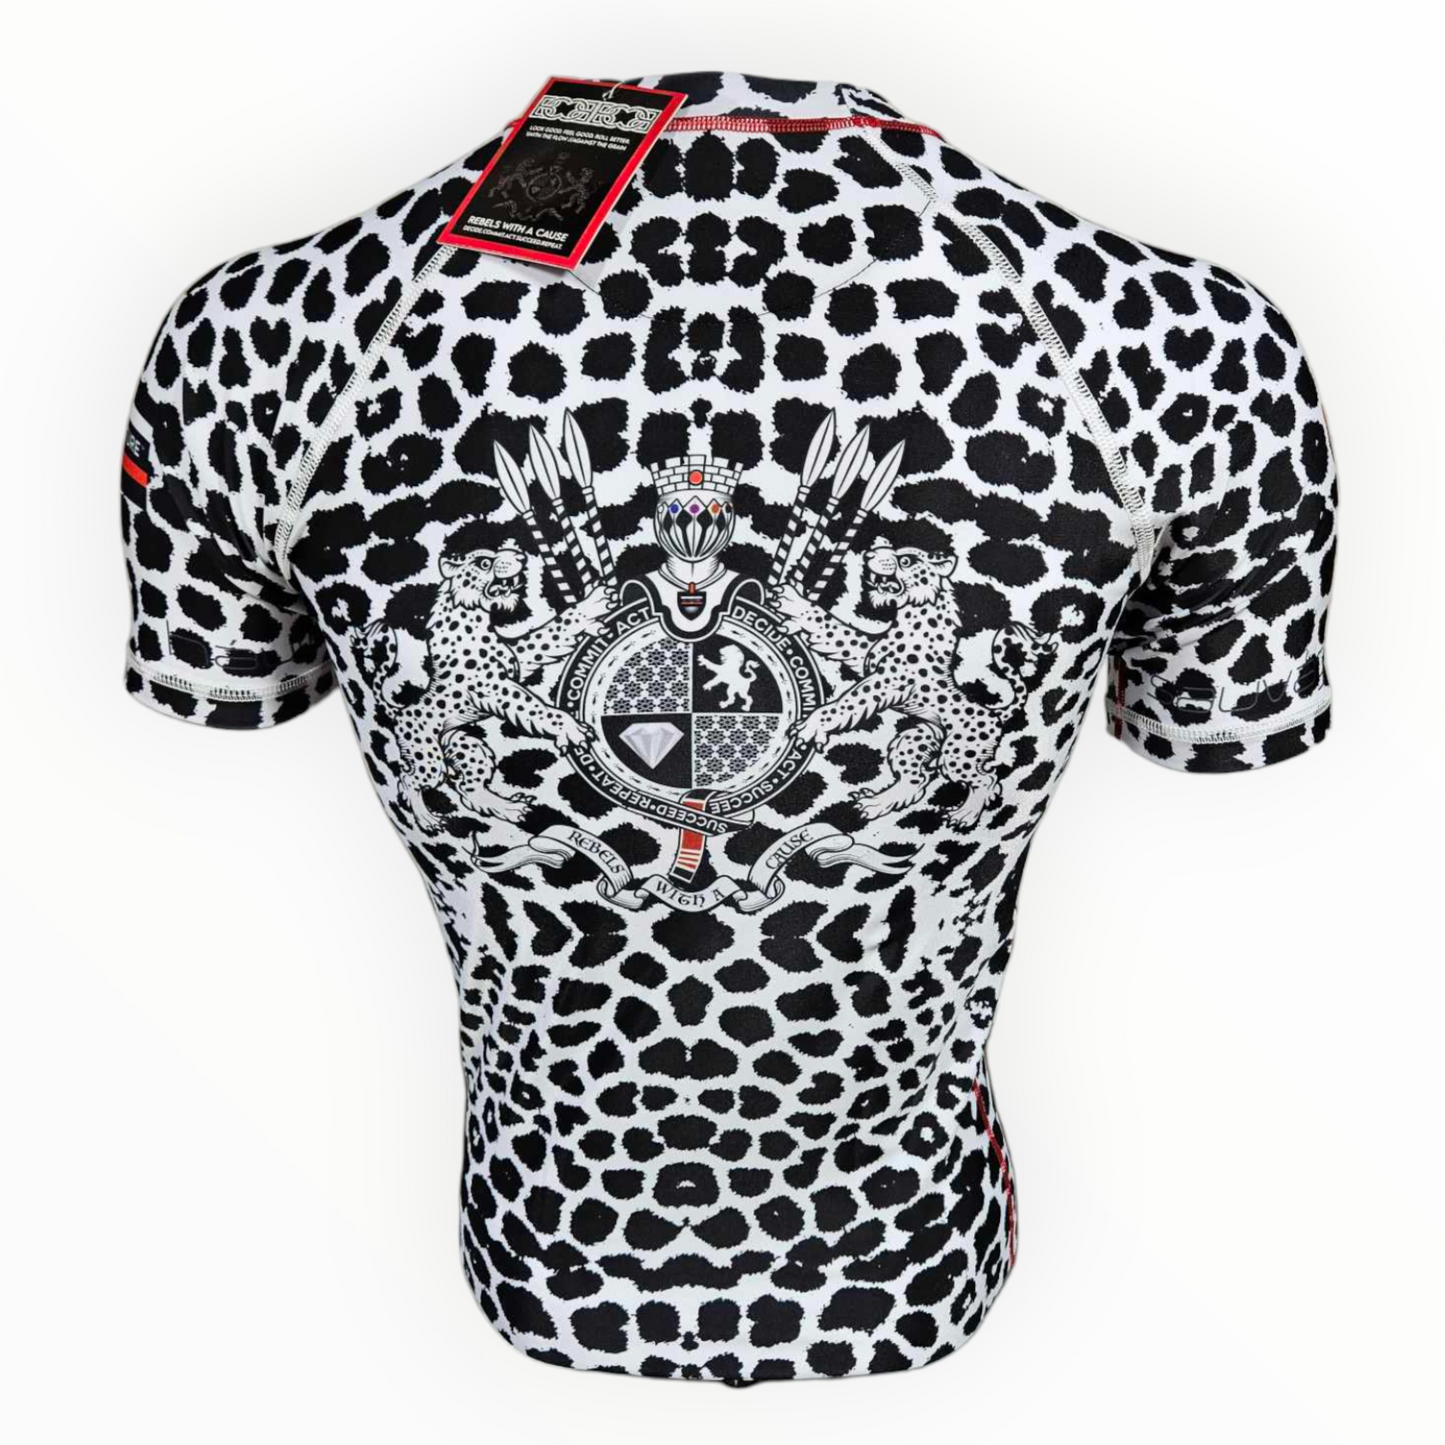 BJJ Couture Seamless White and Black Leopard Pattern Rashguard